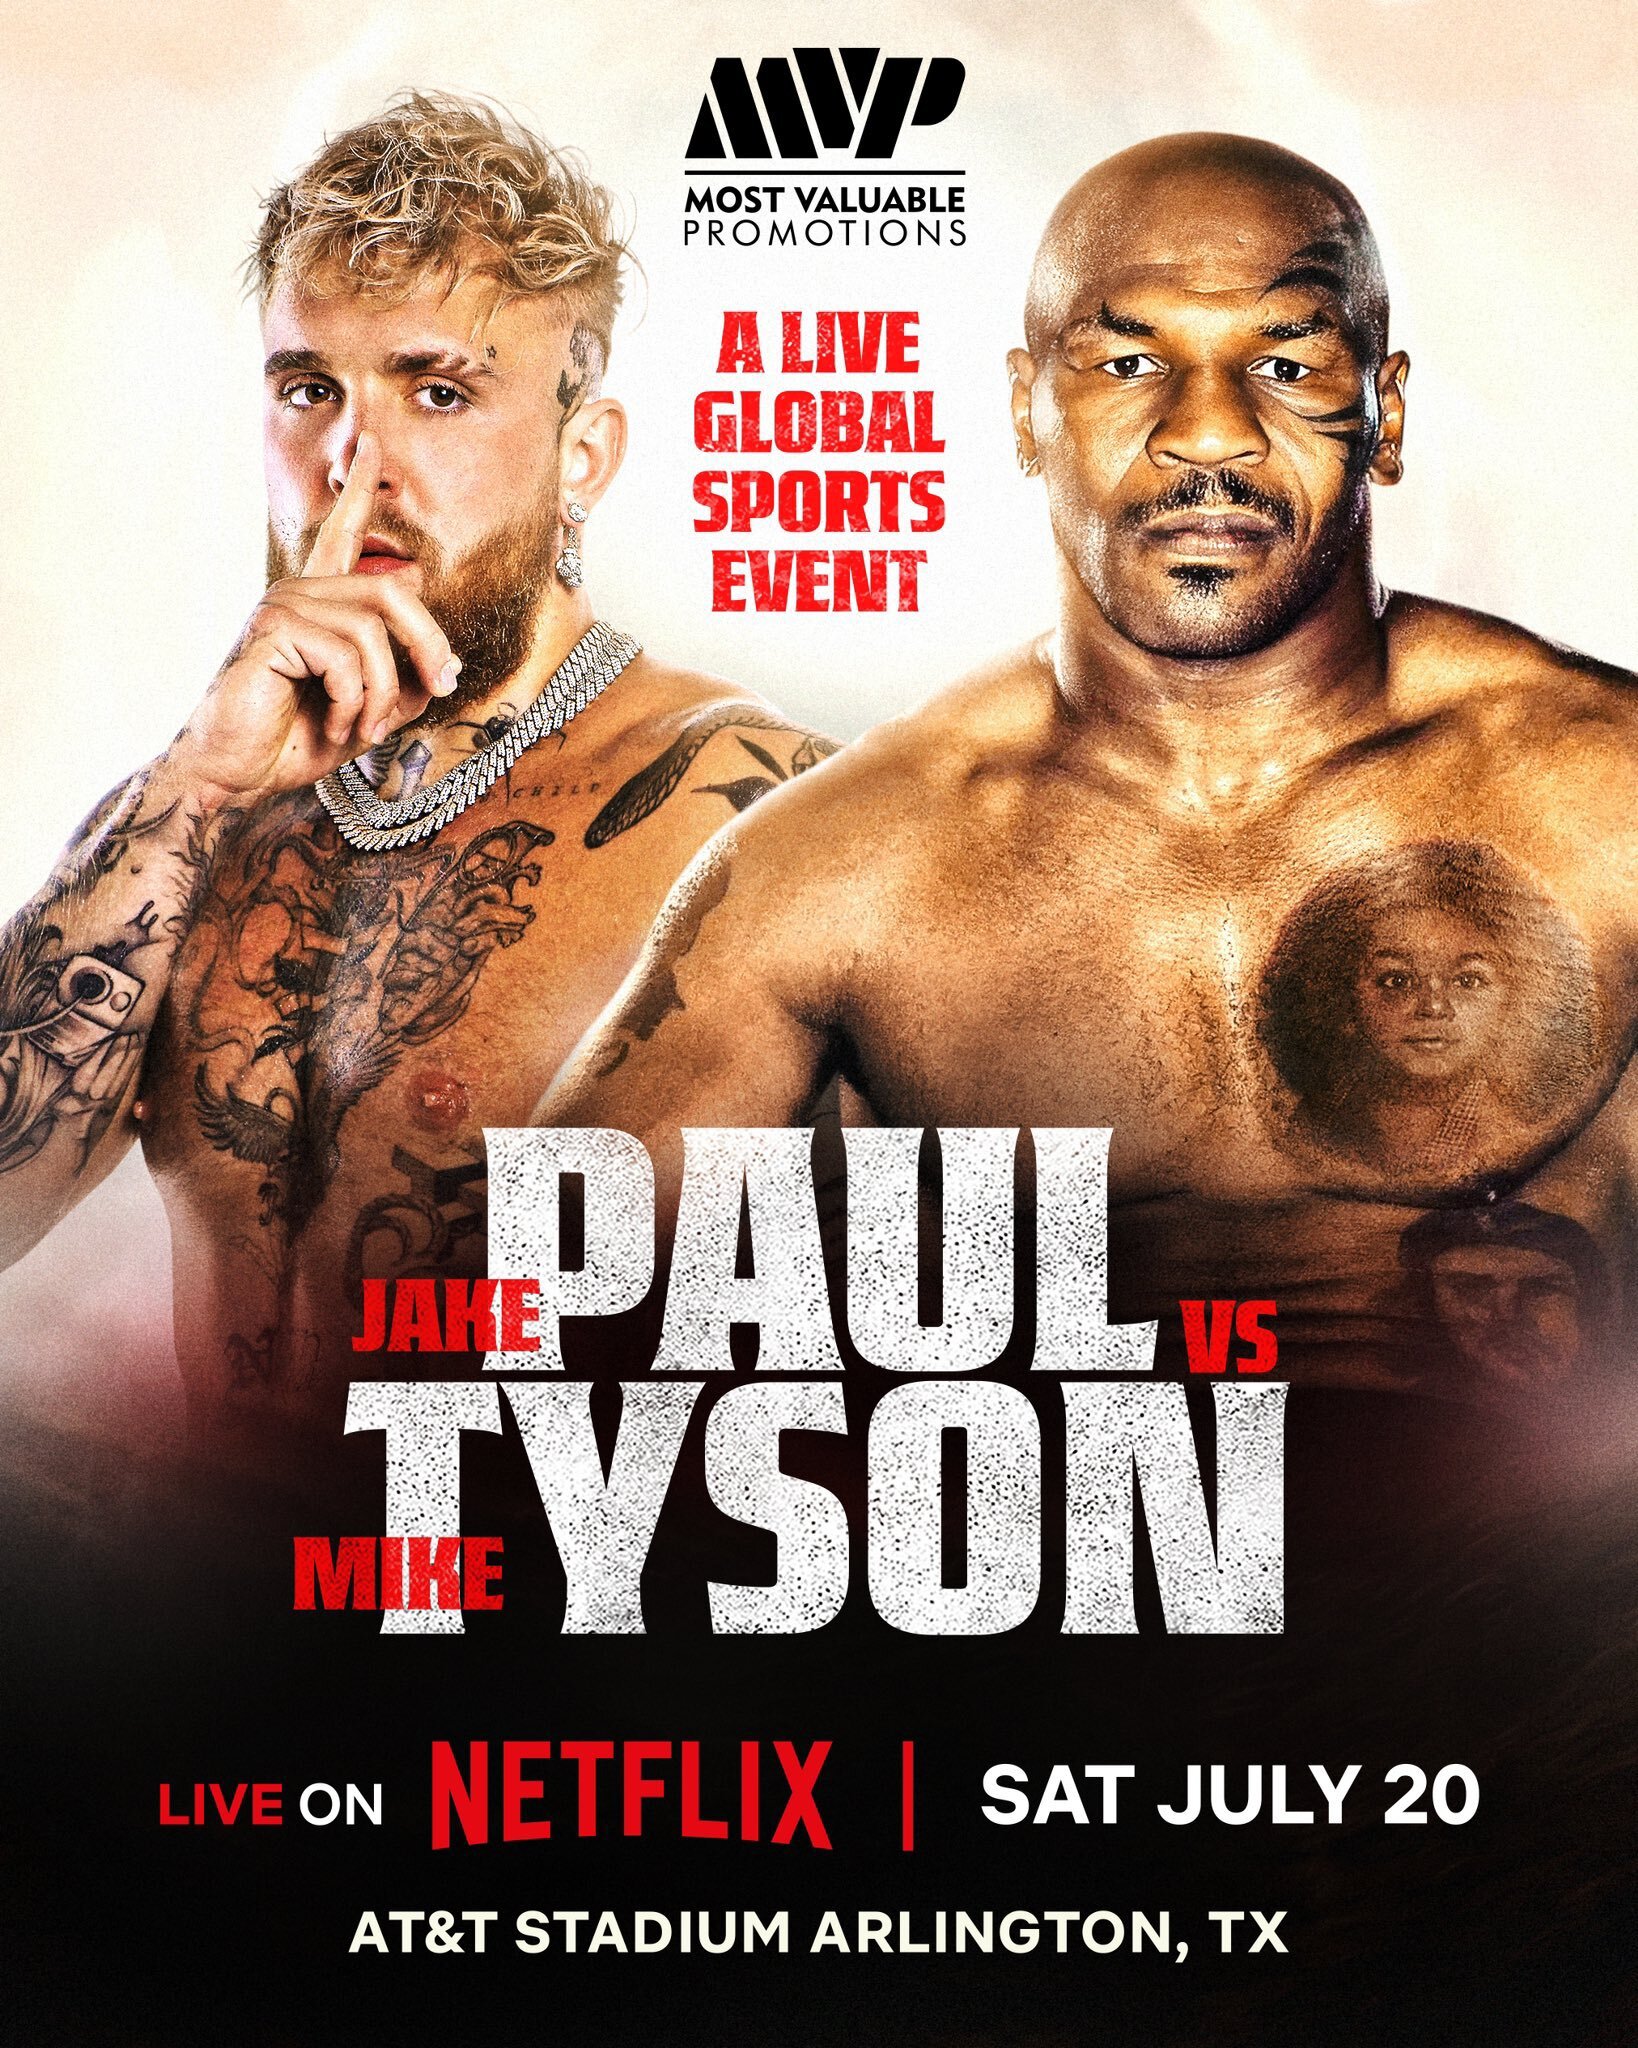 Jake Paul To Fight Mike Tyson On Netflix, July 20